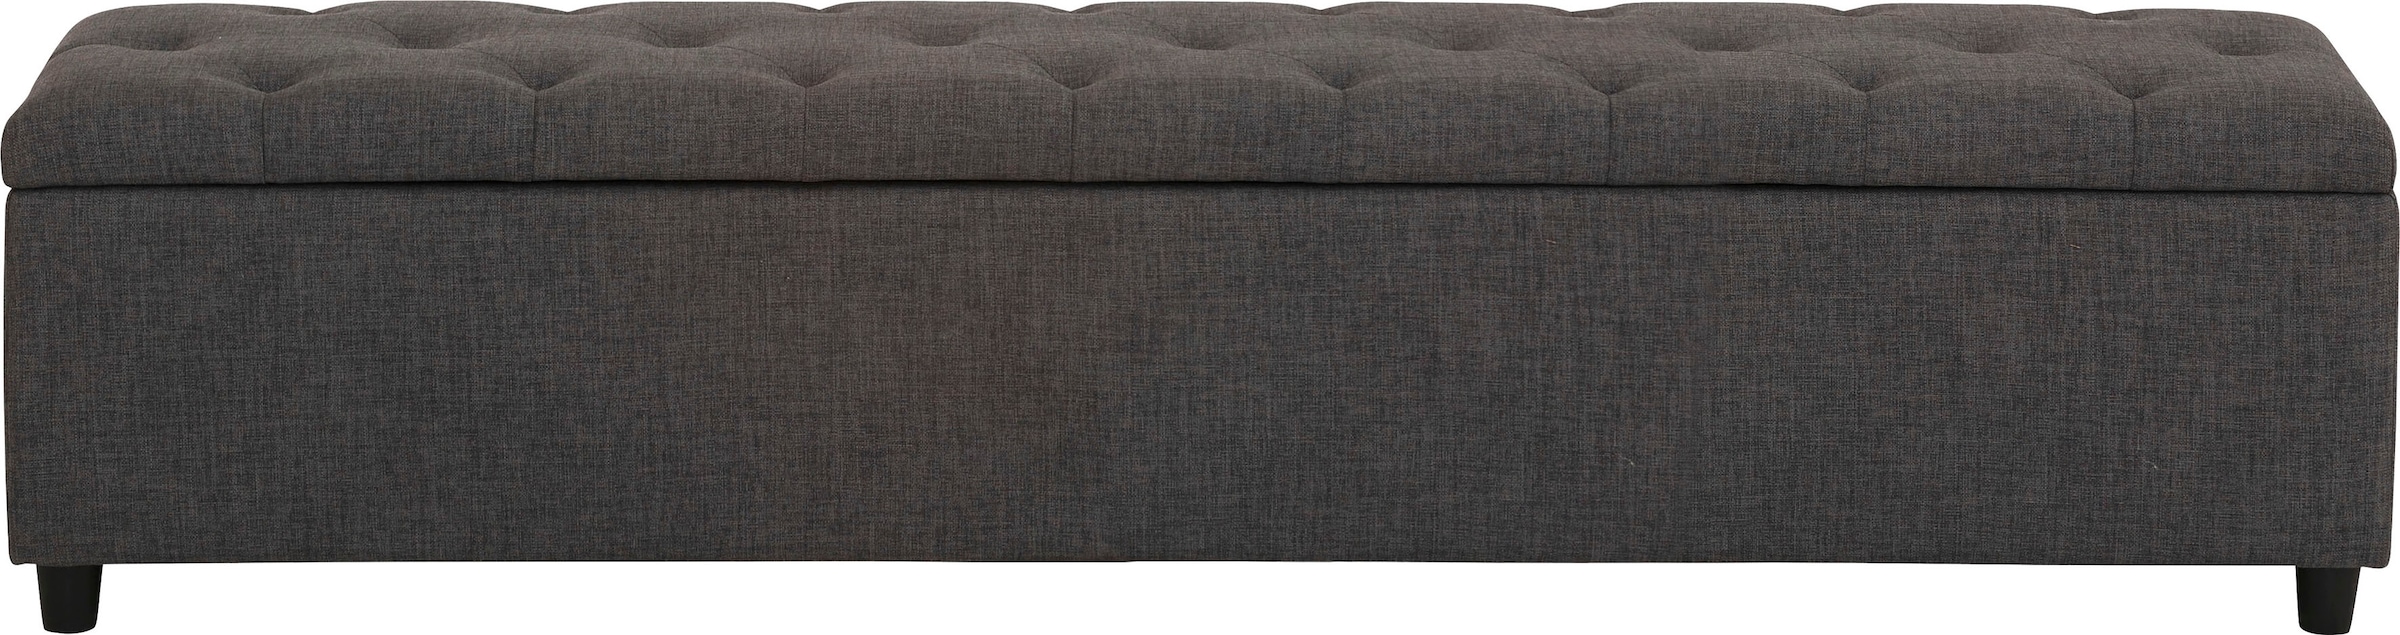 Home affaire Polsterbank »Goronna«, 6 Farben, Sitzhöhe 41,5 cm, als Garderobenbank oder Bettbank geeignet